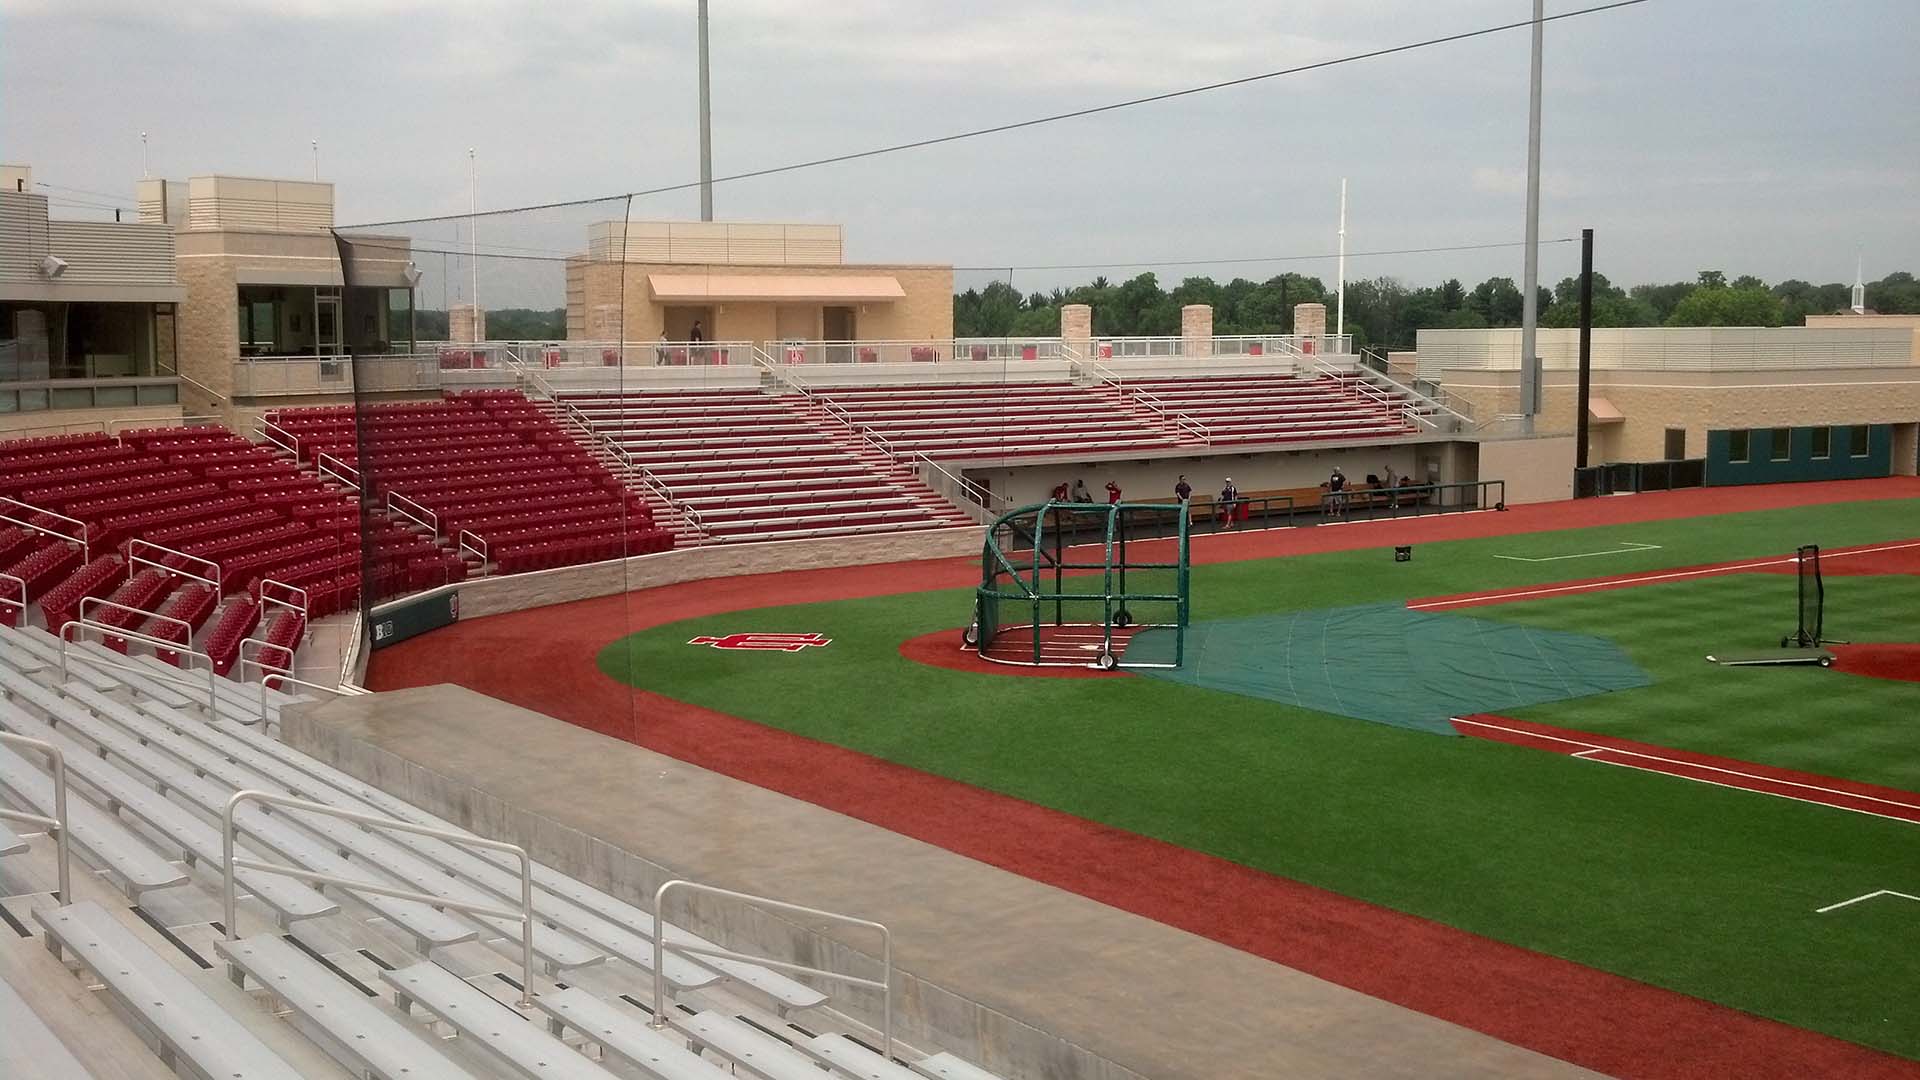 Alternate view of Bart Kaufman Field, including aluminum bench seats.